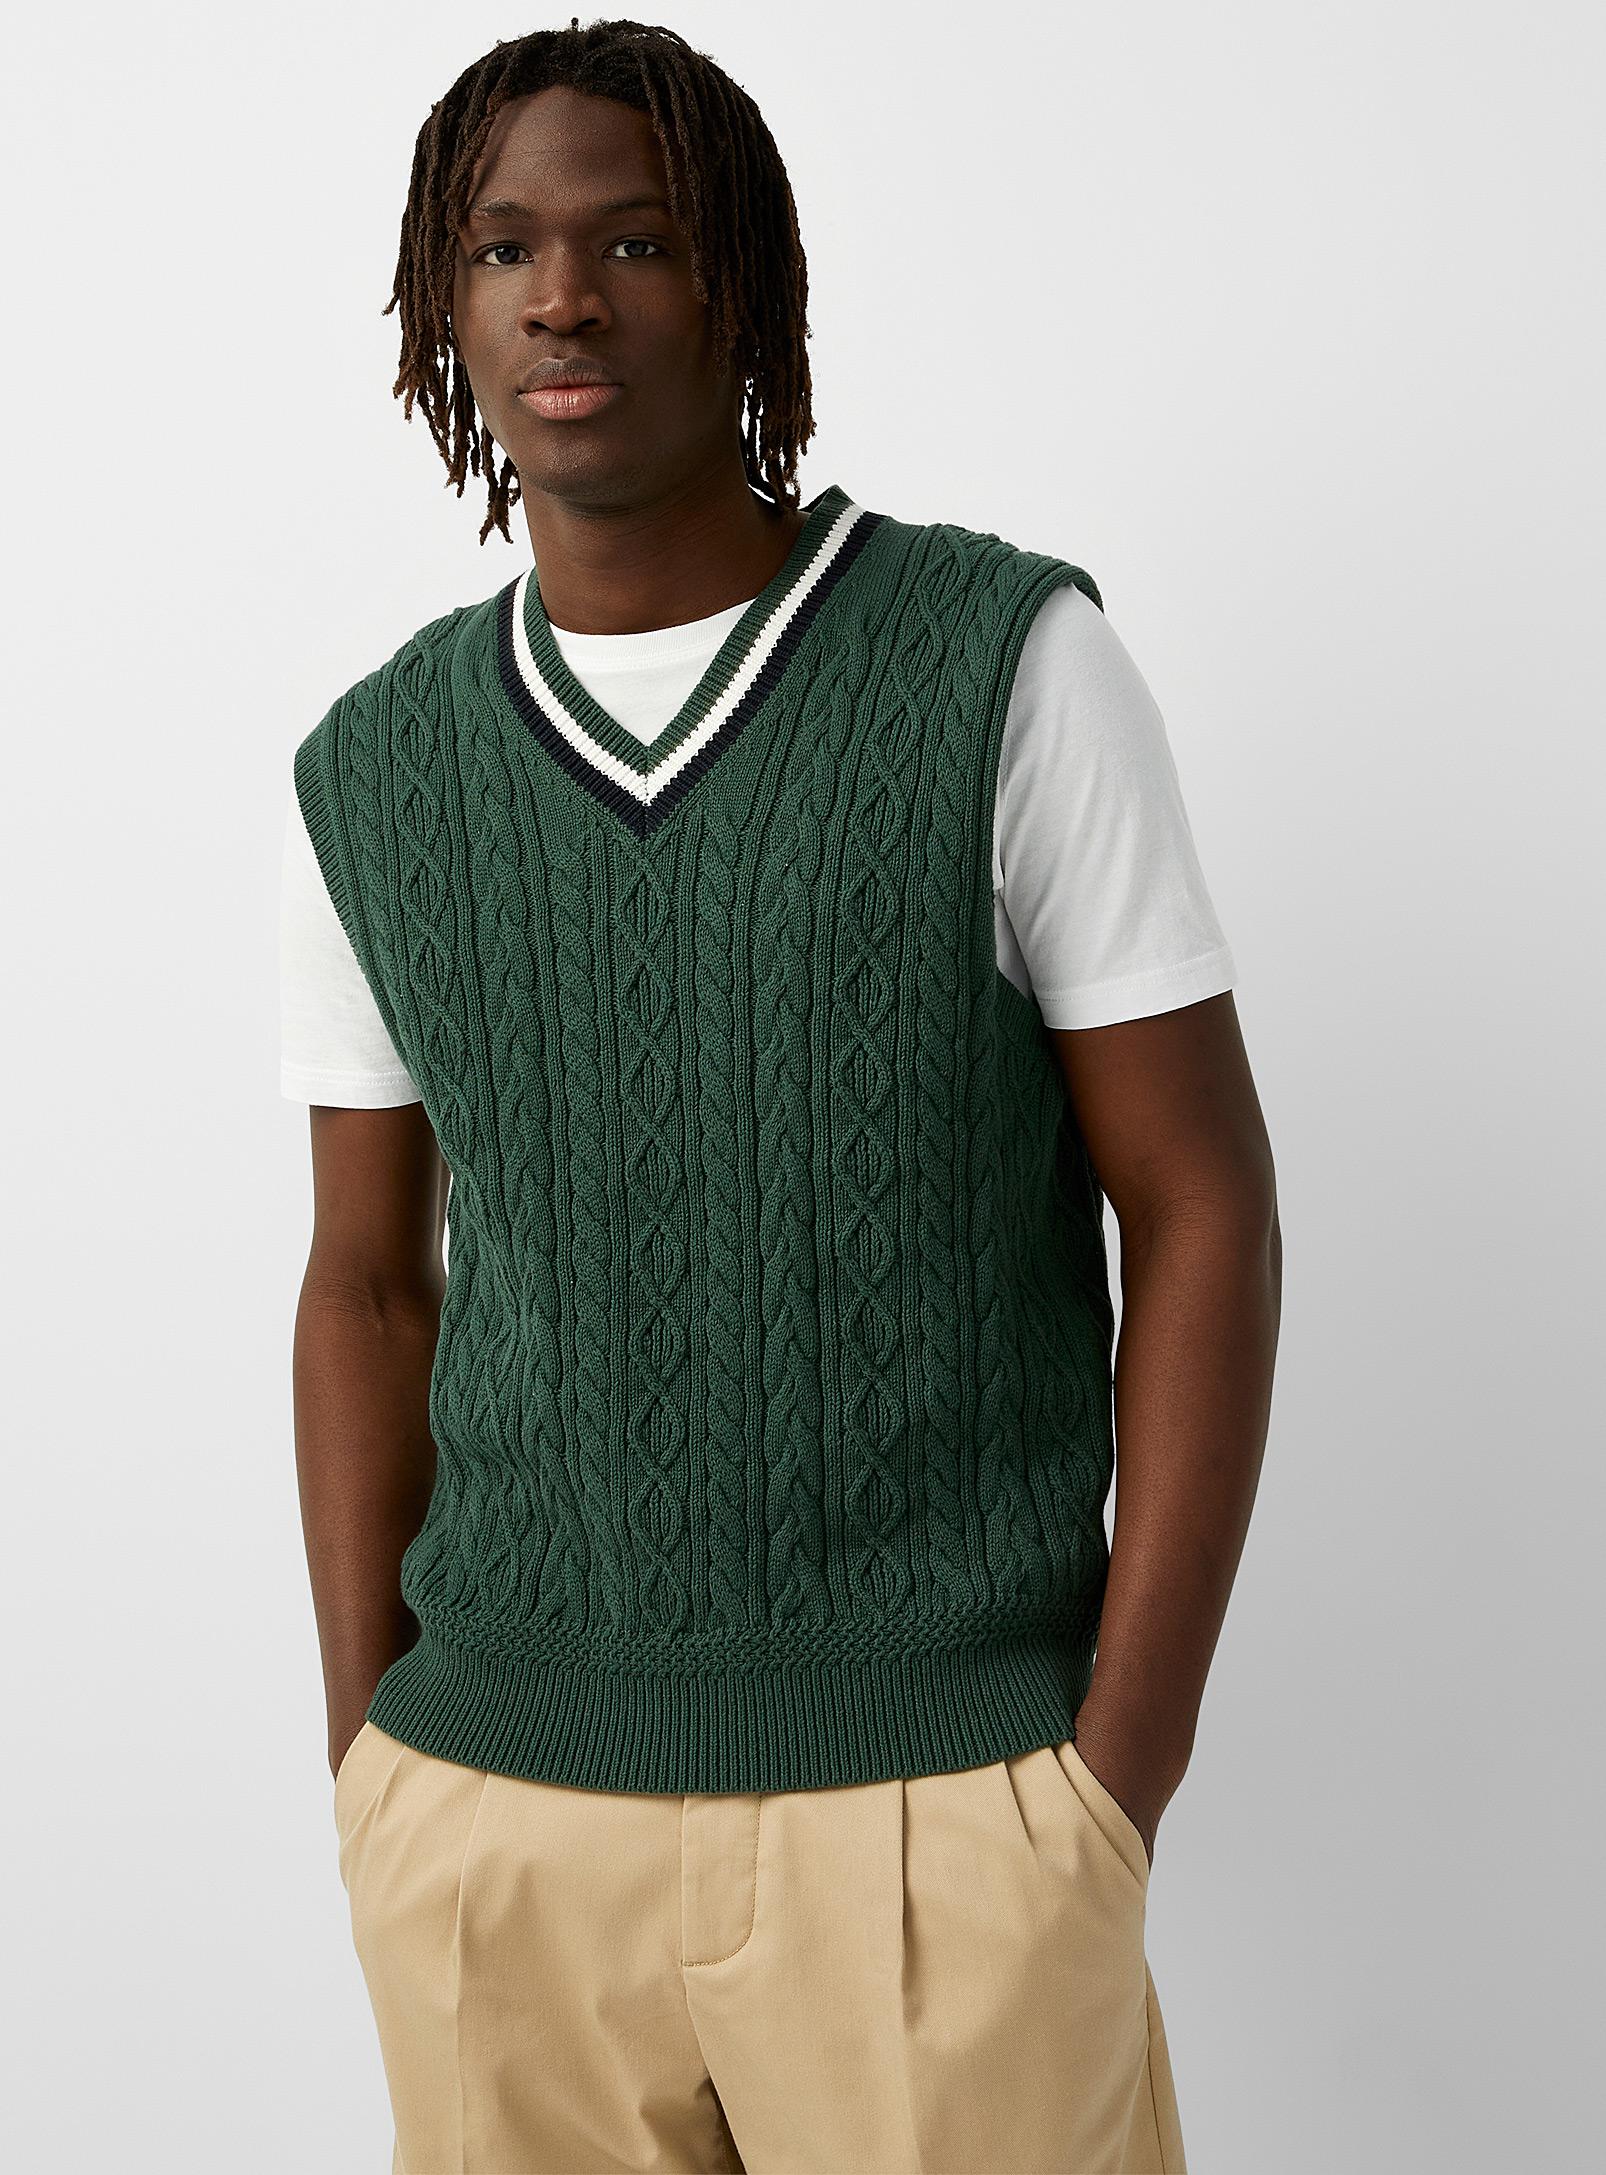 https://cdna.lystit.com/photos/simons/35e44558/le-31-Mossy-Green-Tennis-Sweater-Vest.jpeg